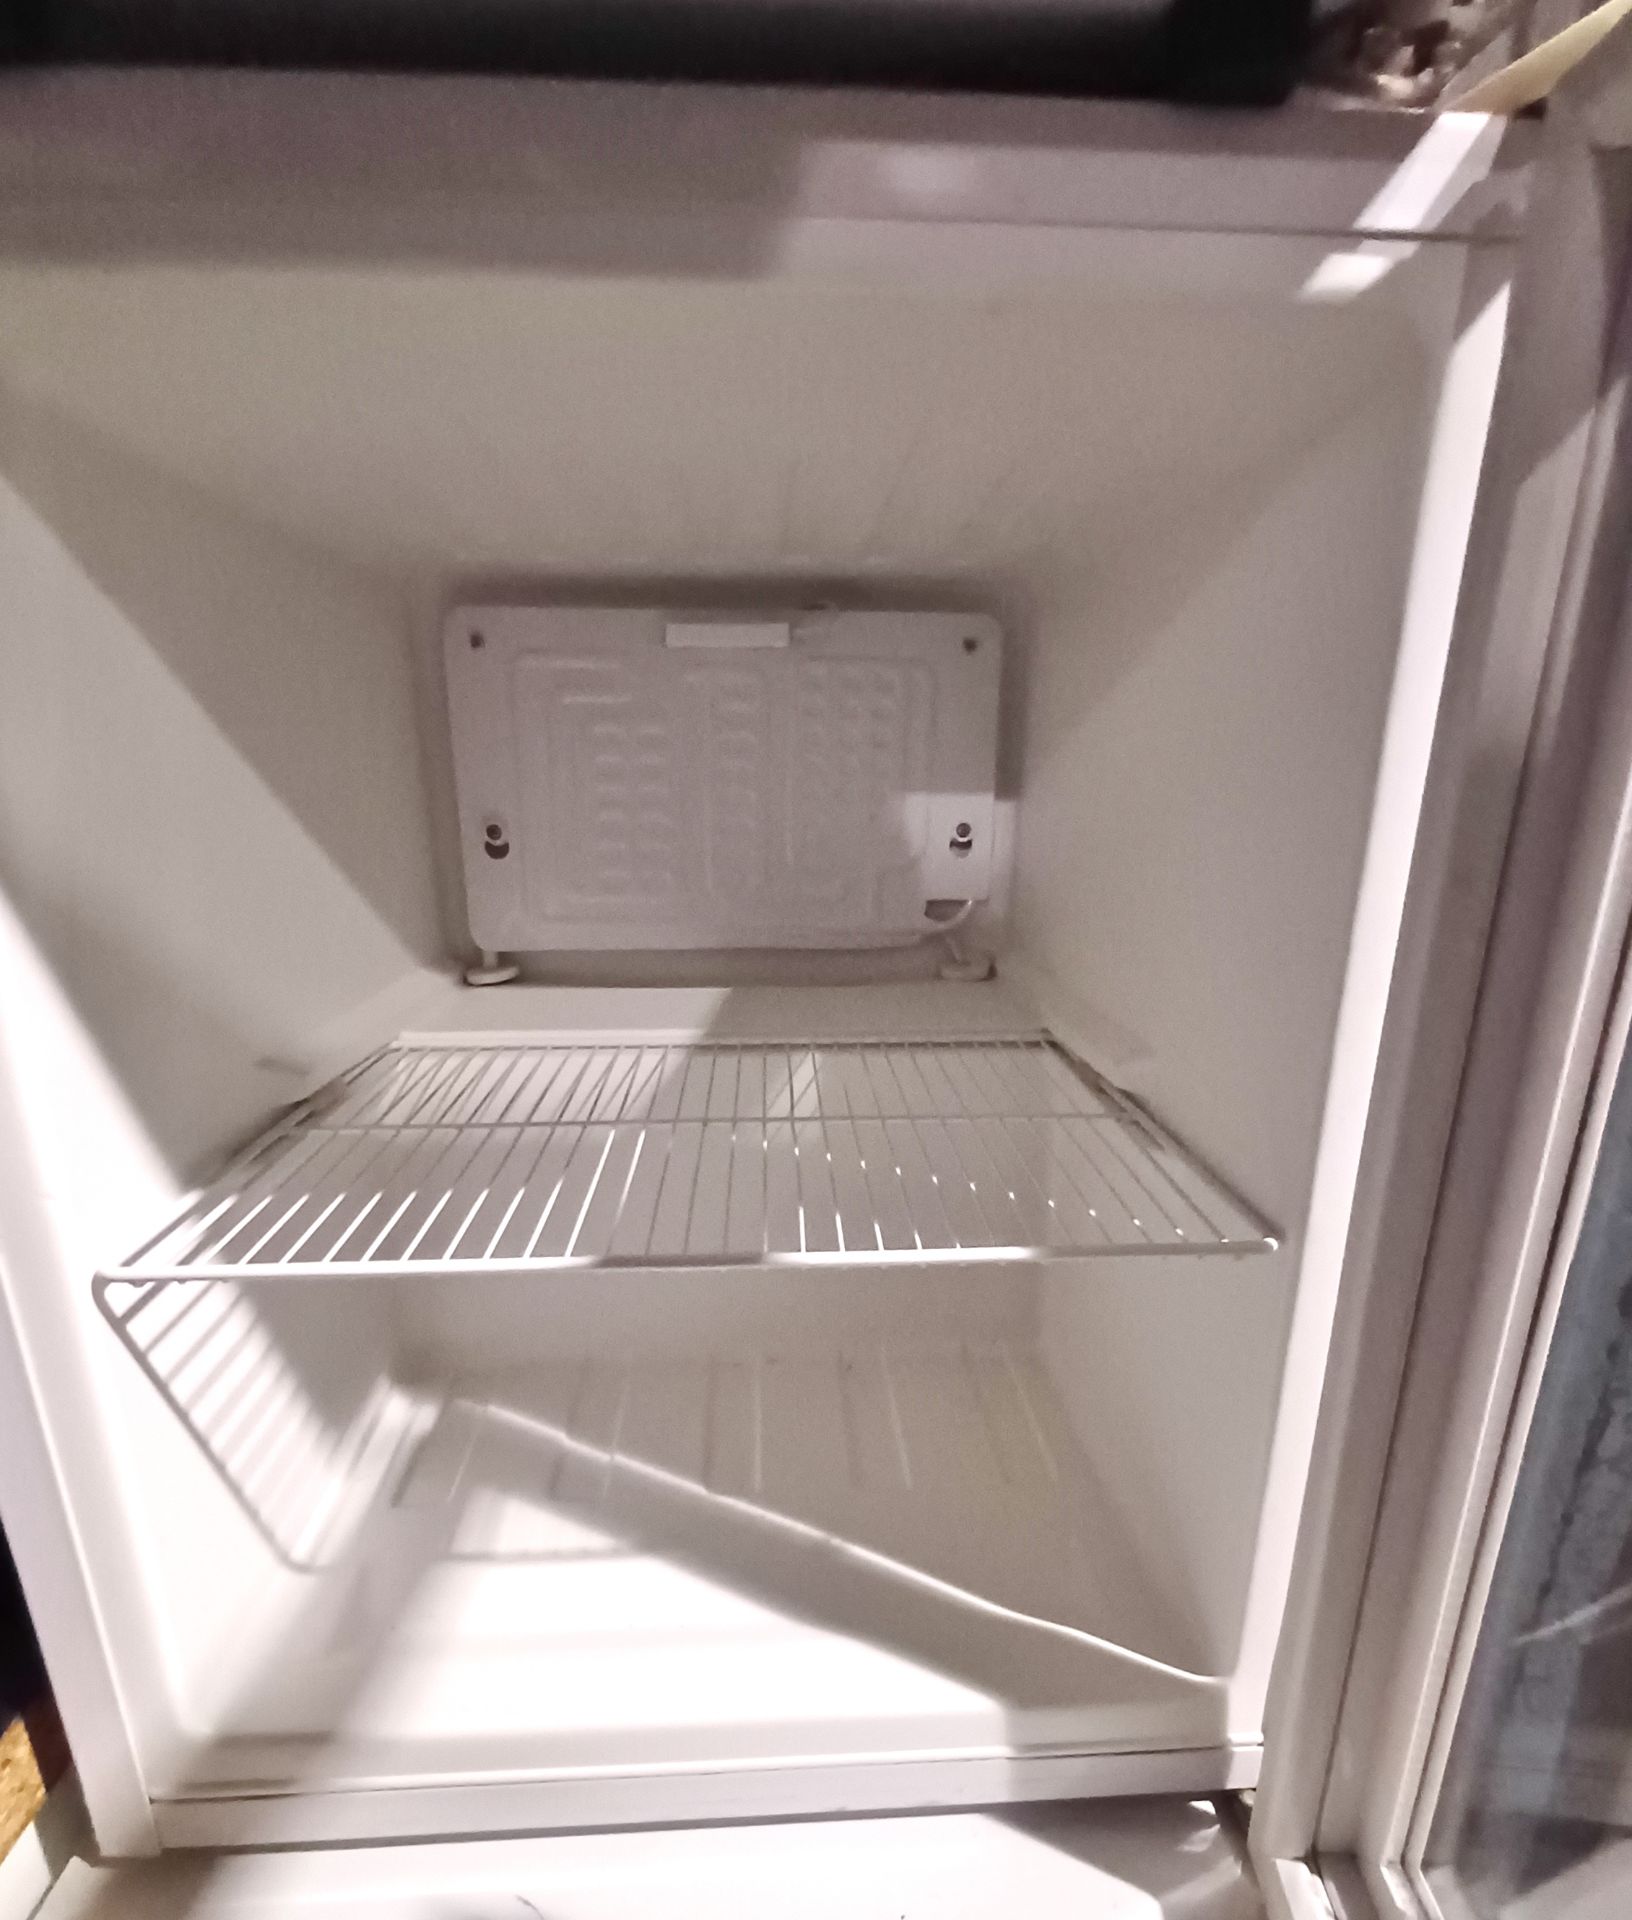 Stella Artois counter top refrigerator - Image 2 of 4